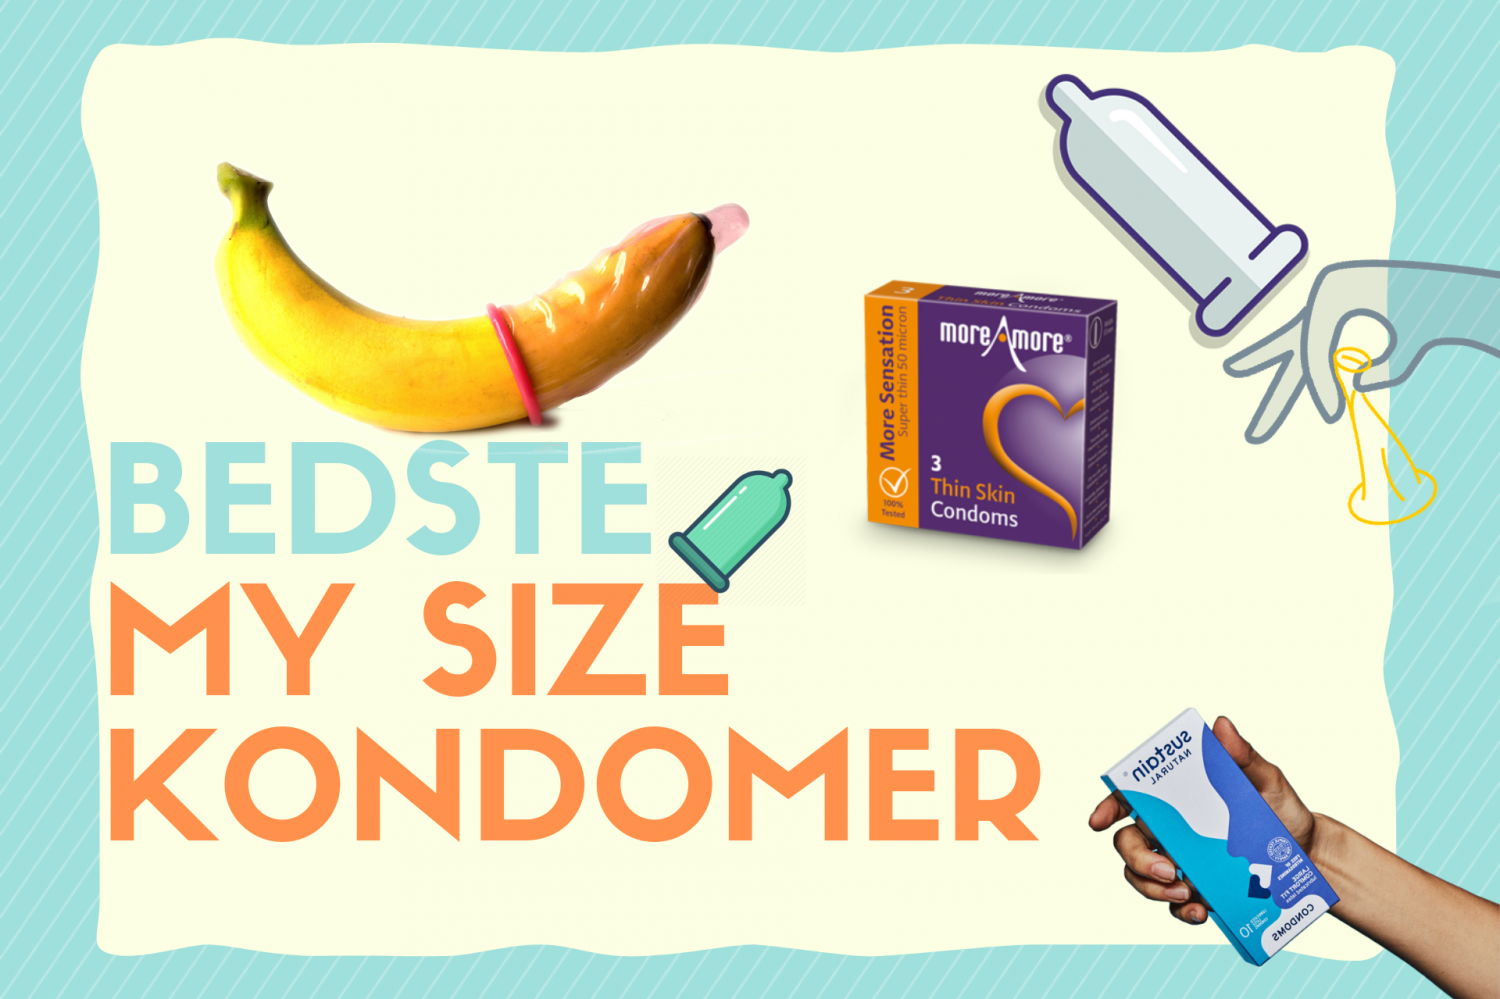 Bedste my size kondomer